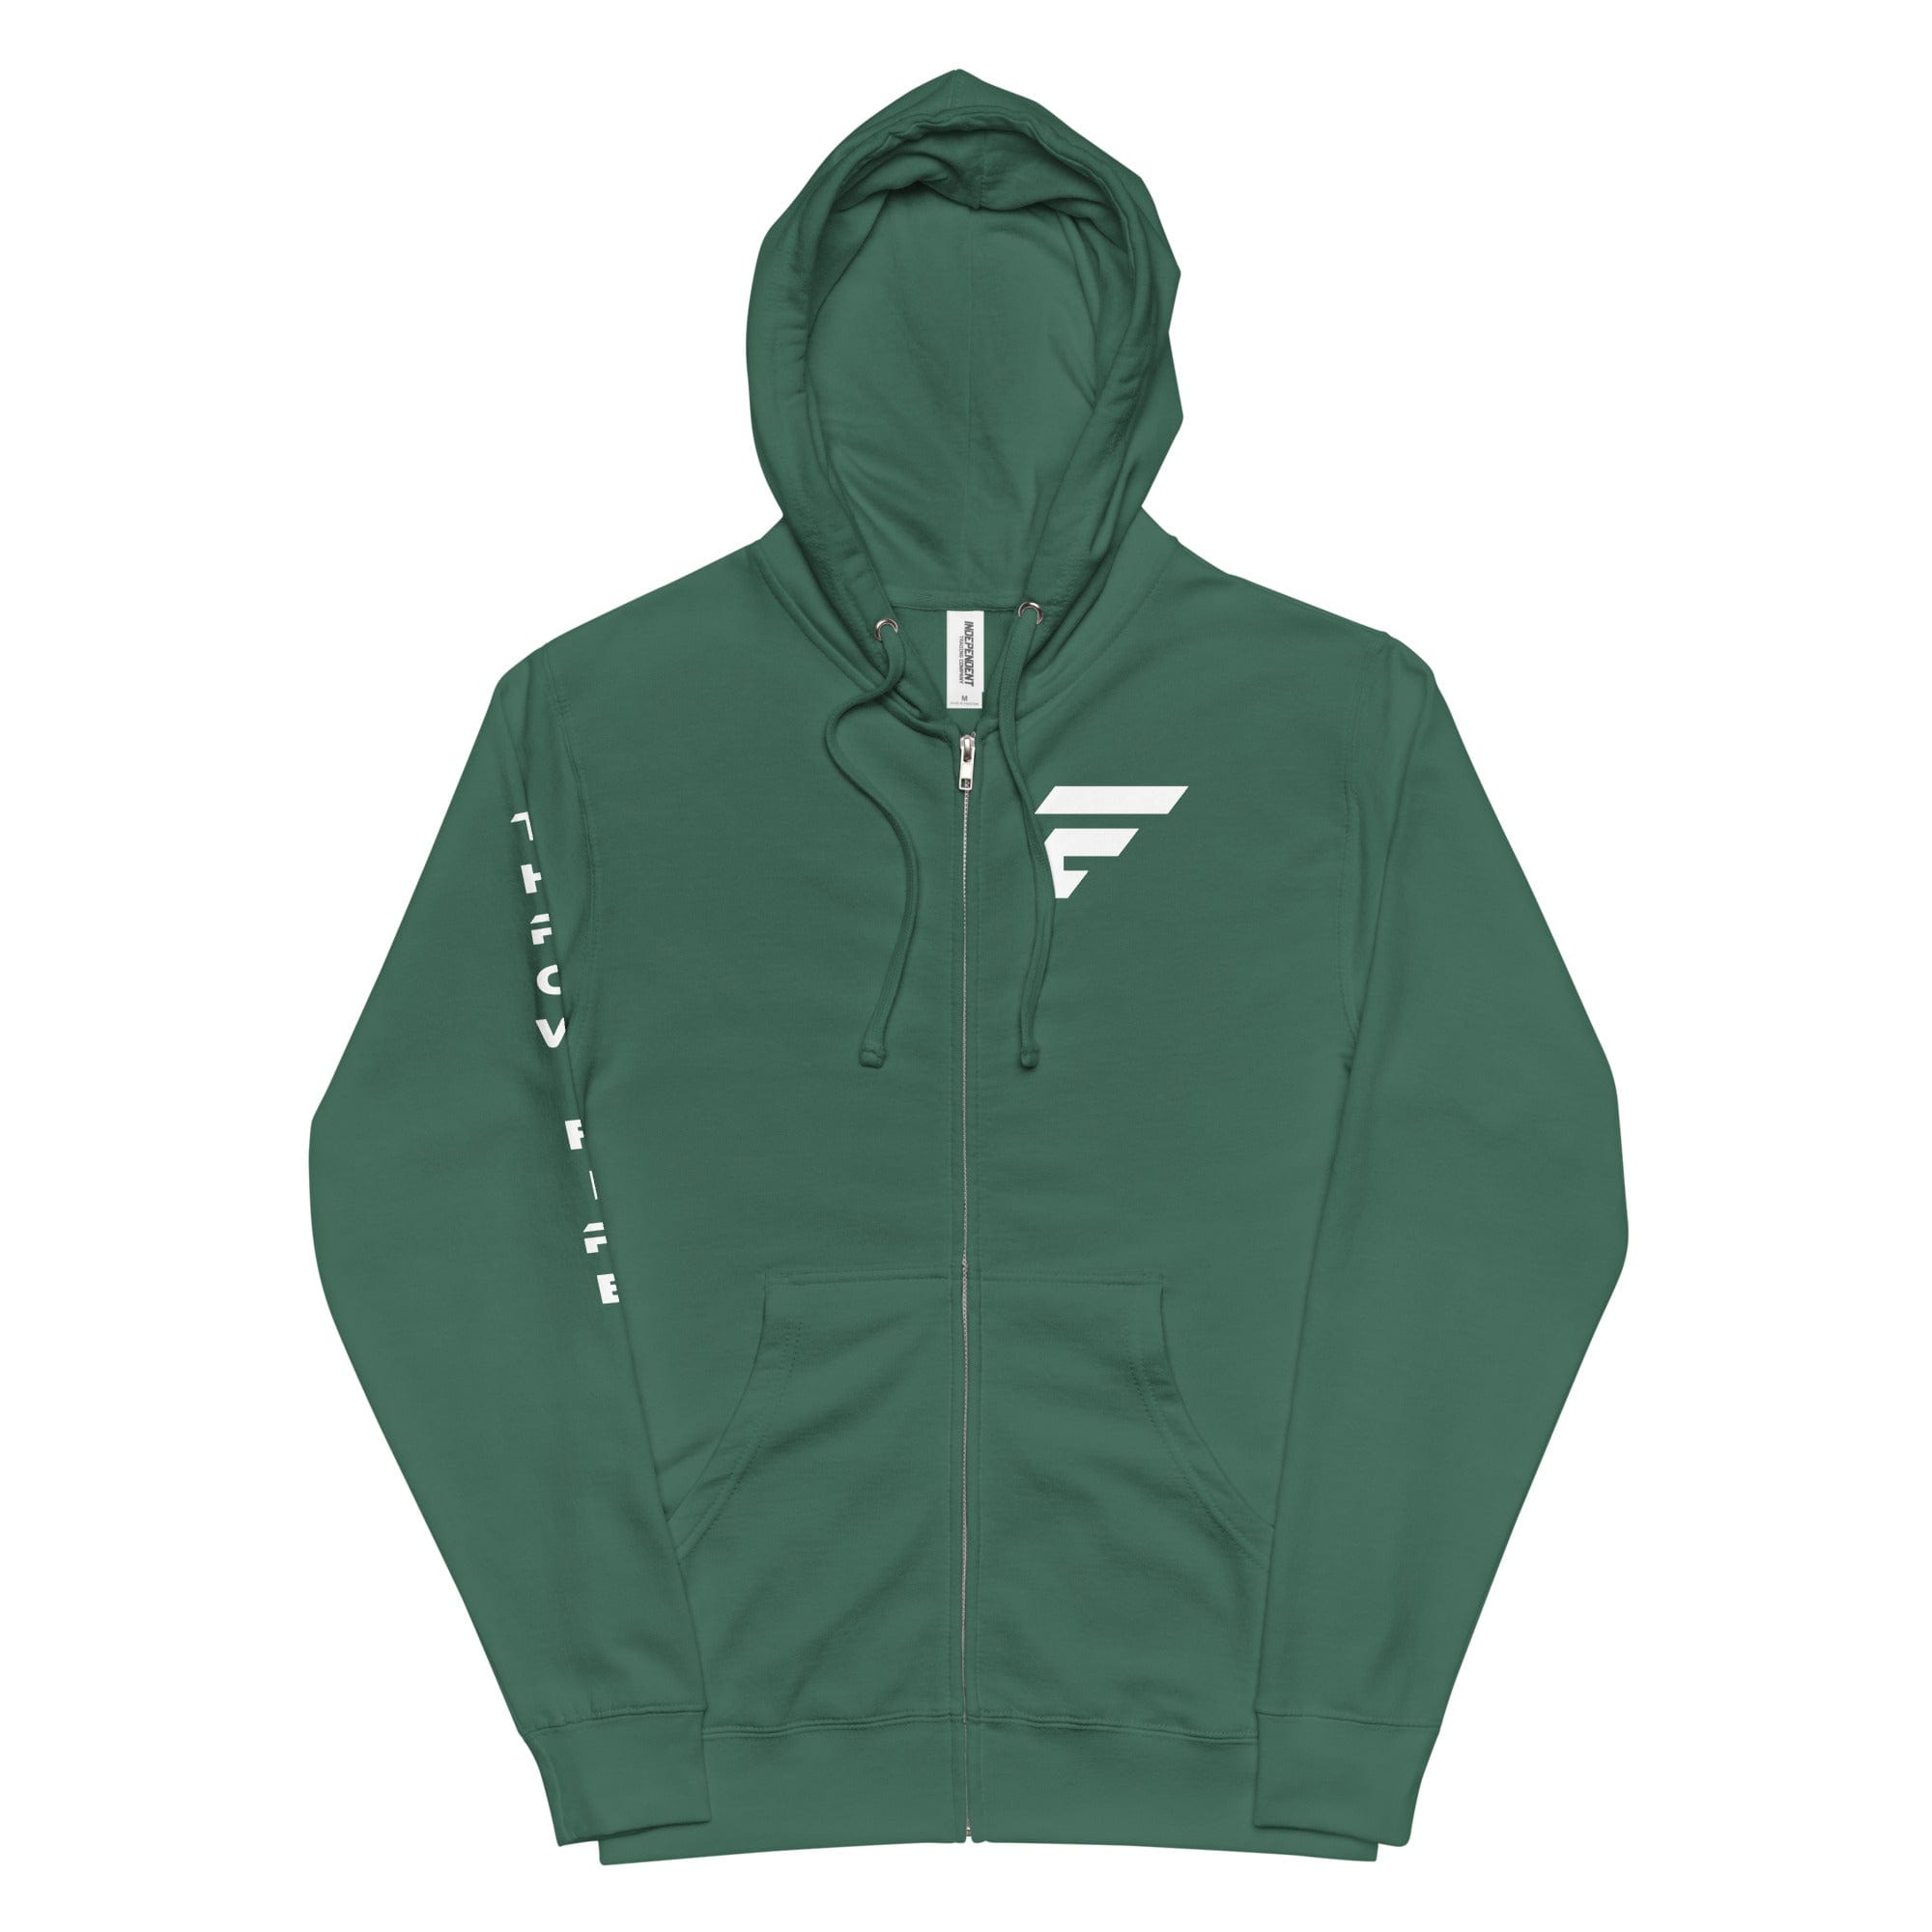 Green unisex fleece zip-up hoodie with Fire Cornhole logo in white